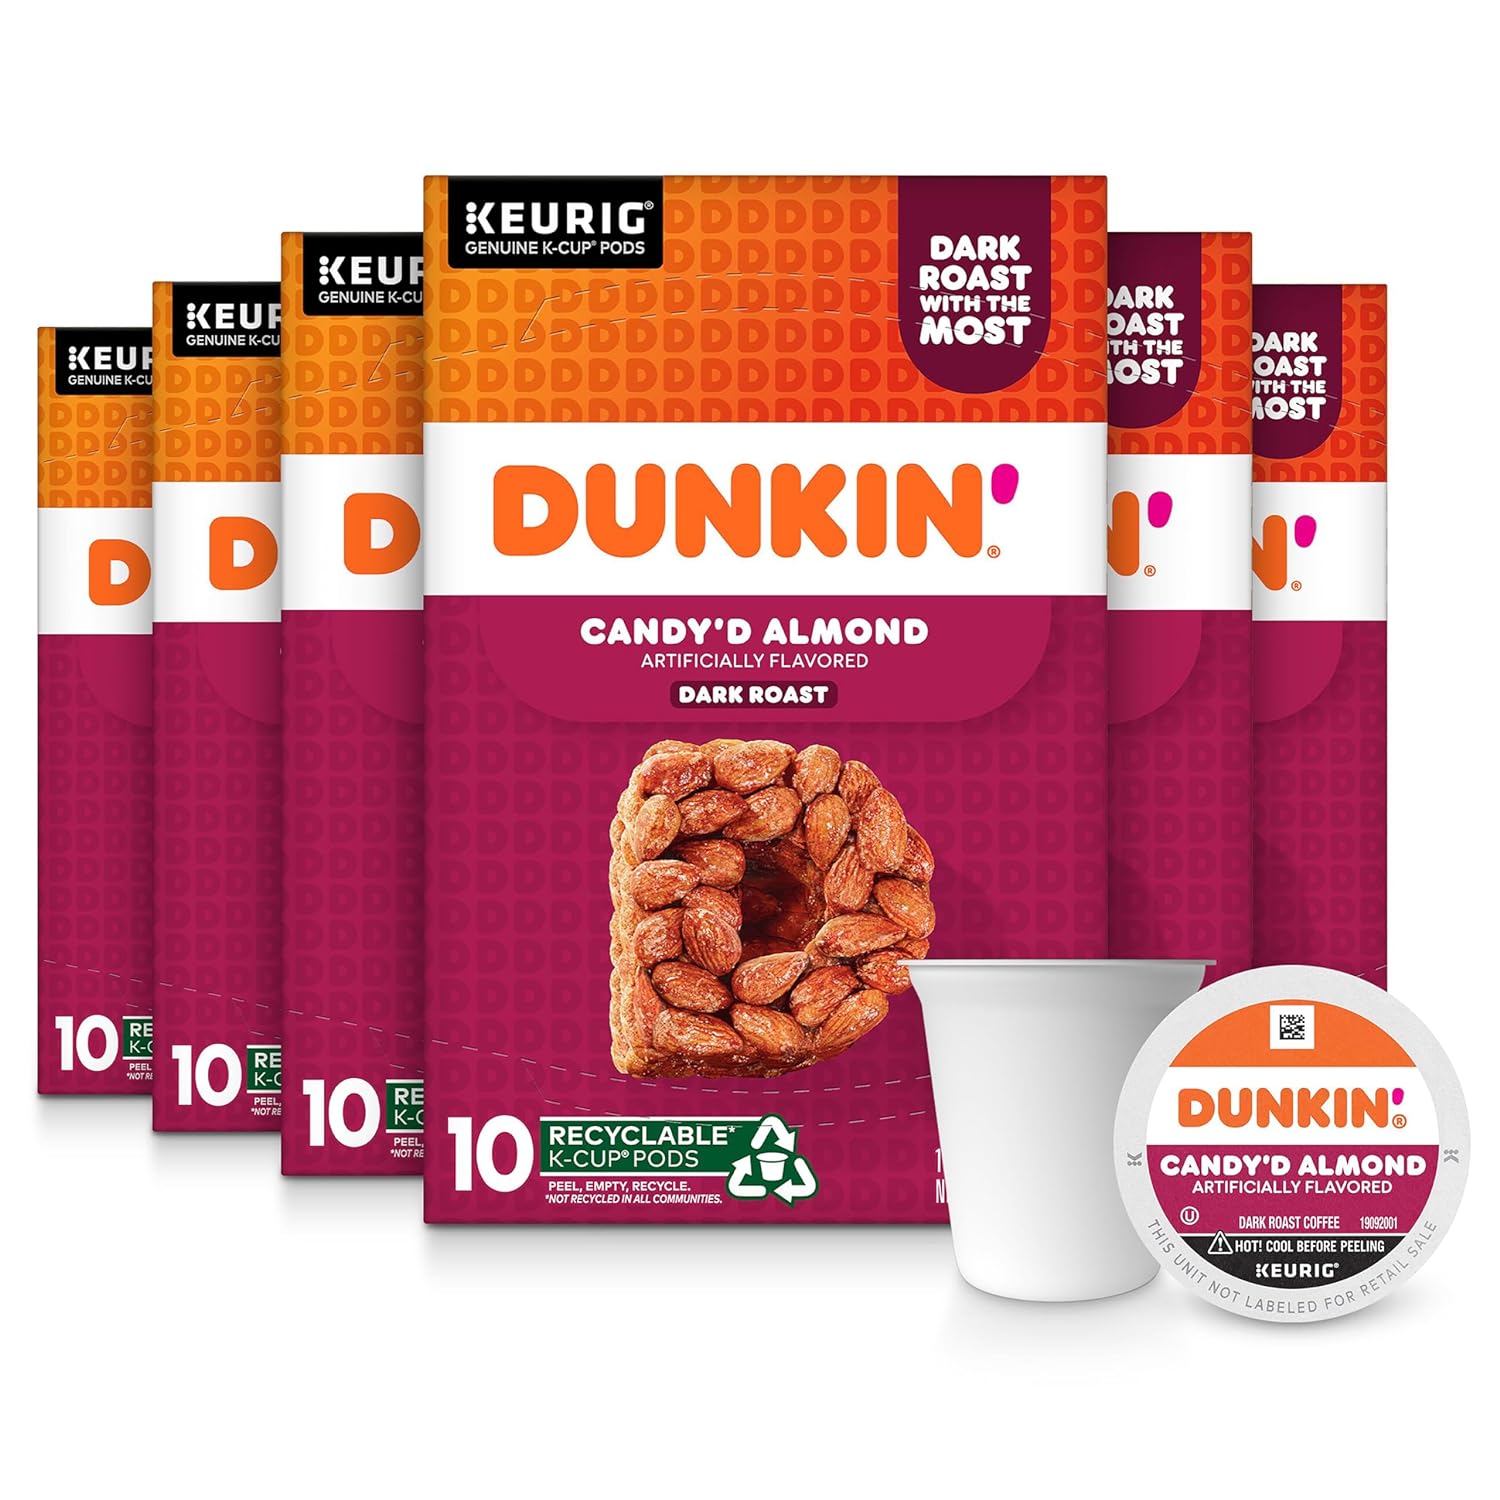 Dunkin' Candy'd Almond Dark Roast Flavored Coffee, 60 Keurig K-Cup Pods